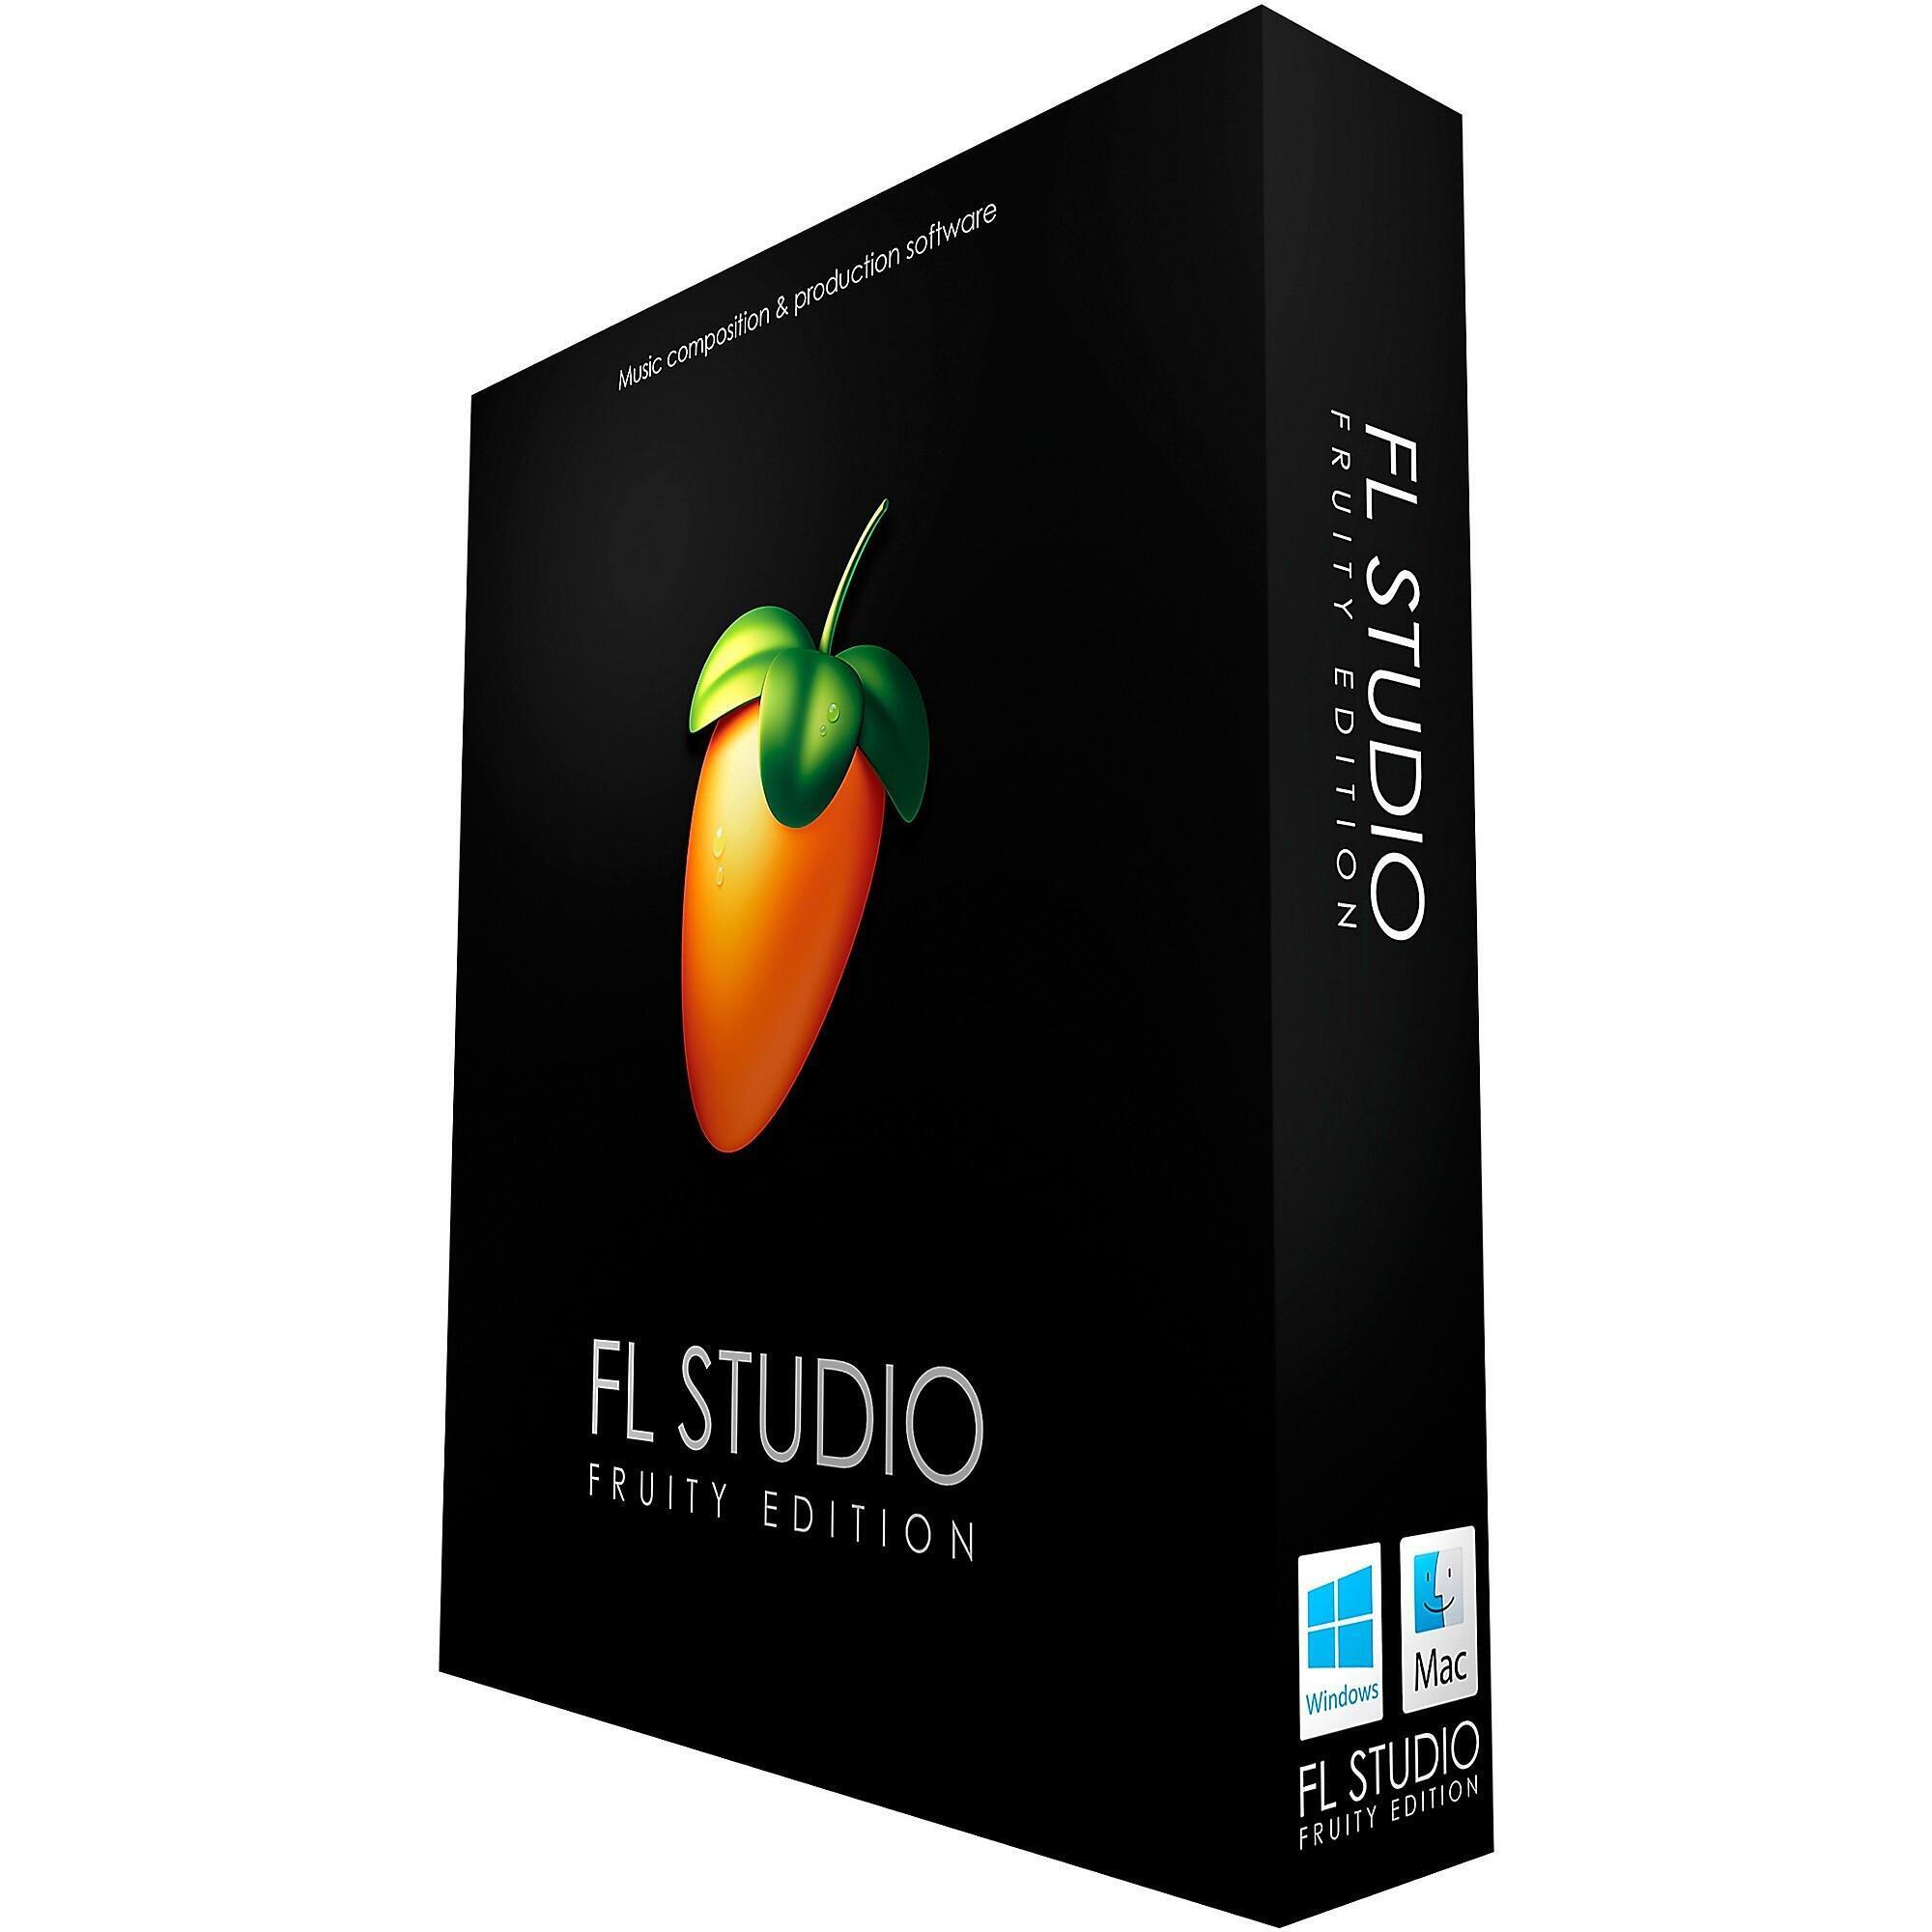 Bundled Item: Image Line FL Studio Fruity Edition